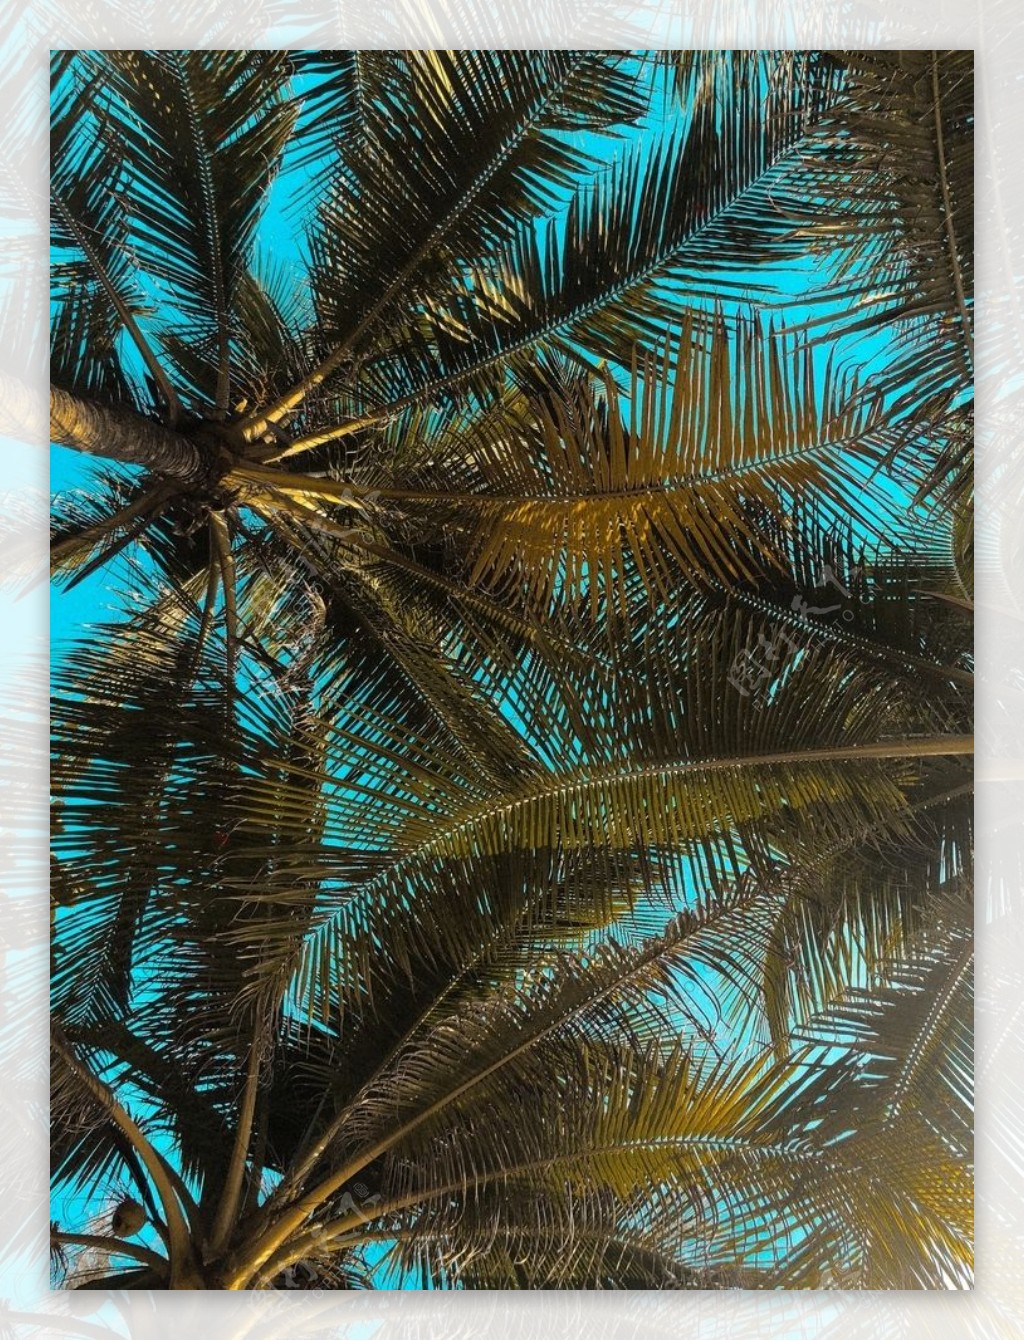 棕榈树 免费图片 - Public Domain Pictures